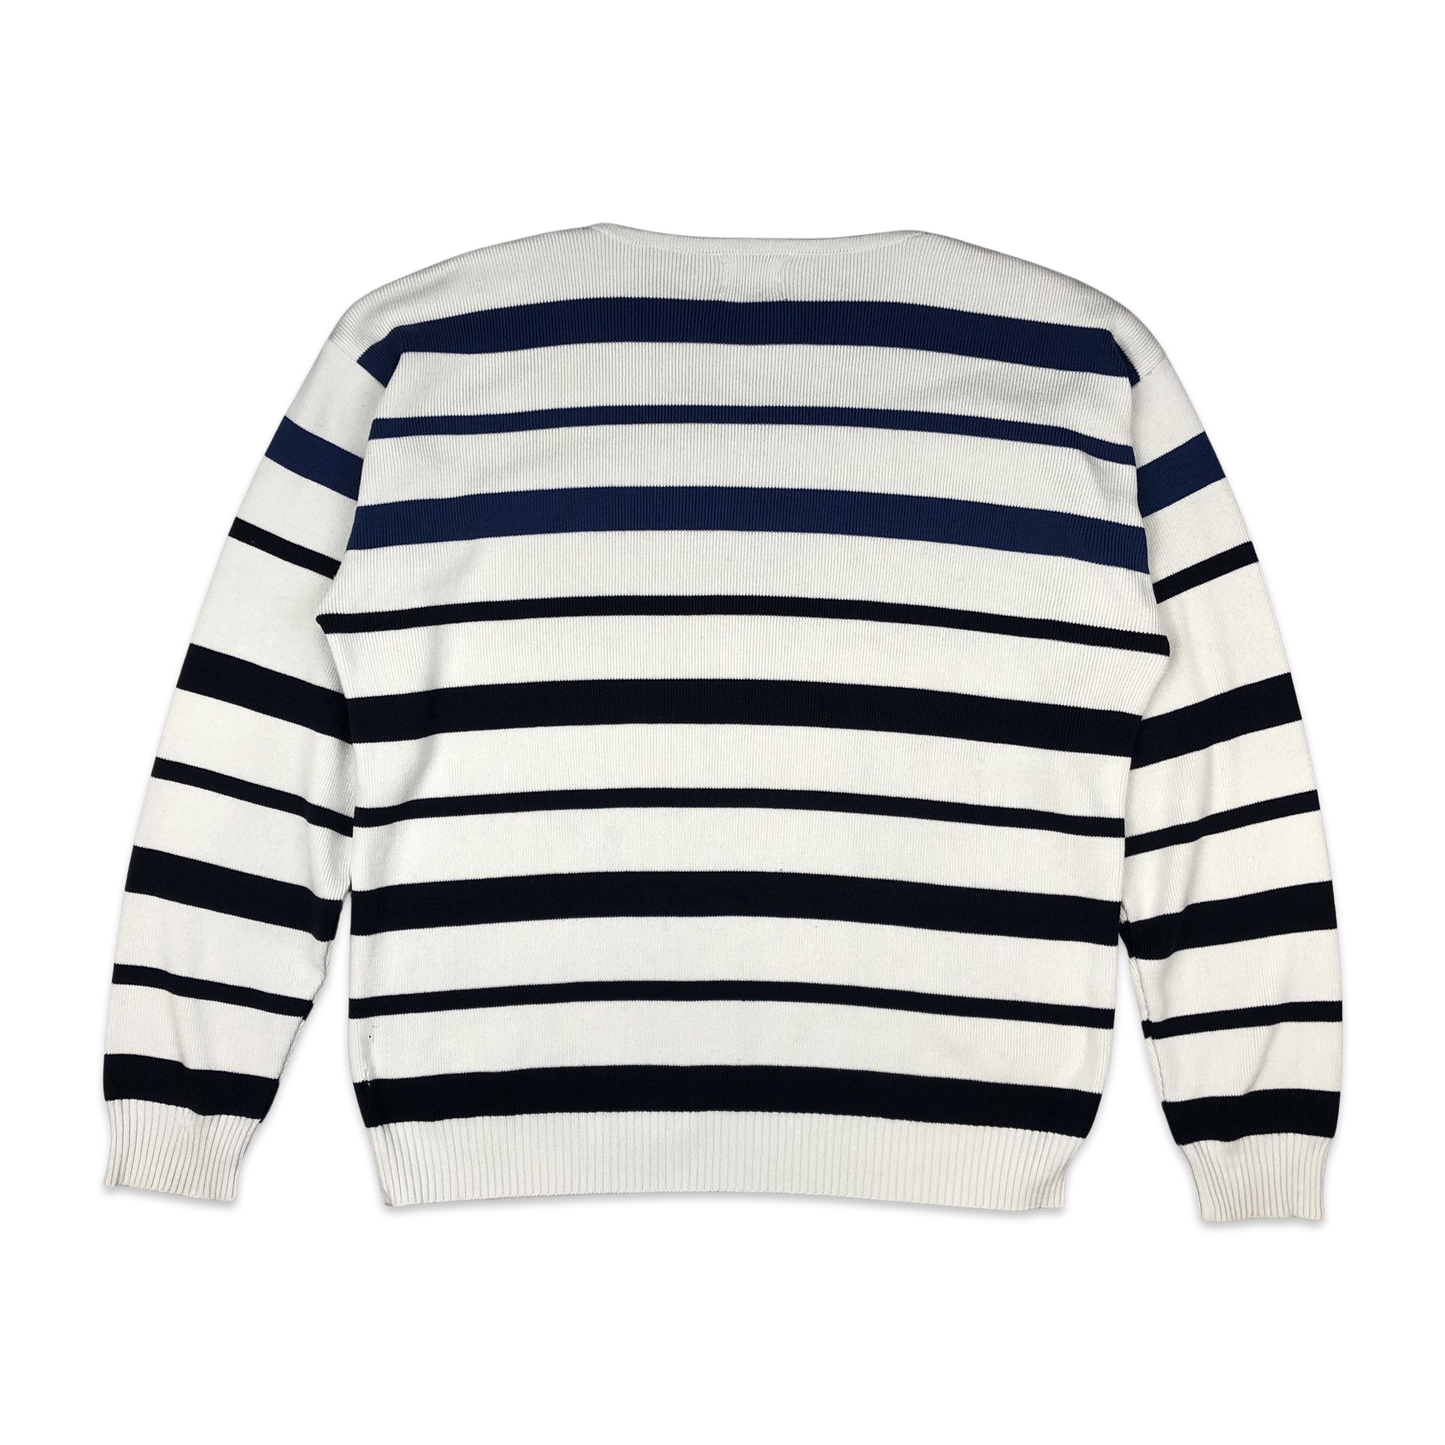 Lacoste White Navy Black Striped Knit Jumper M L